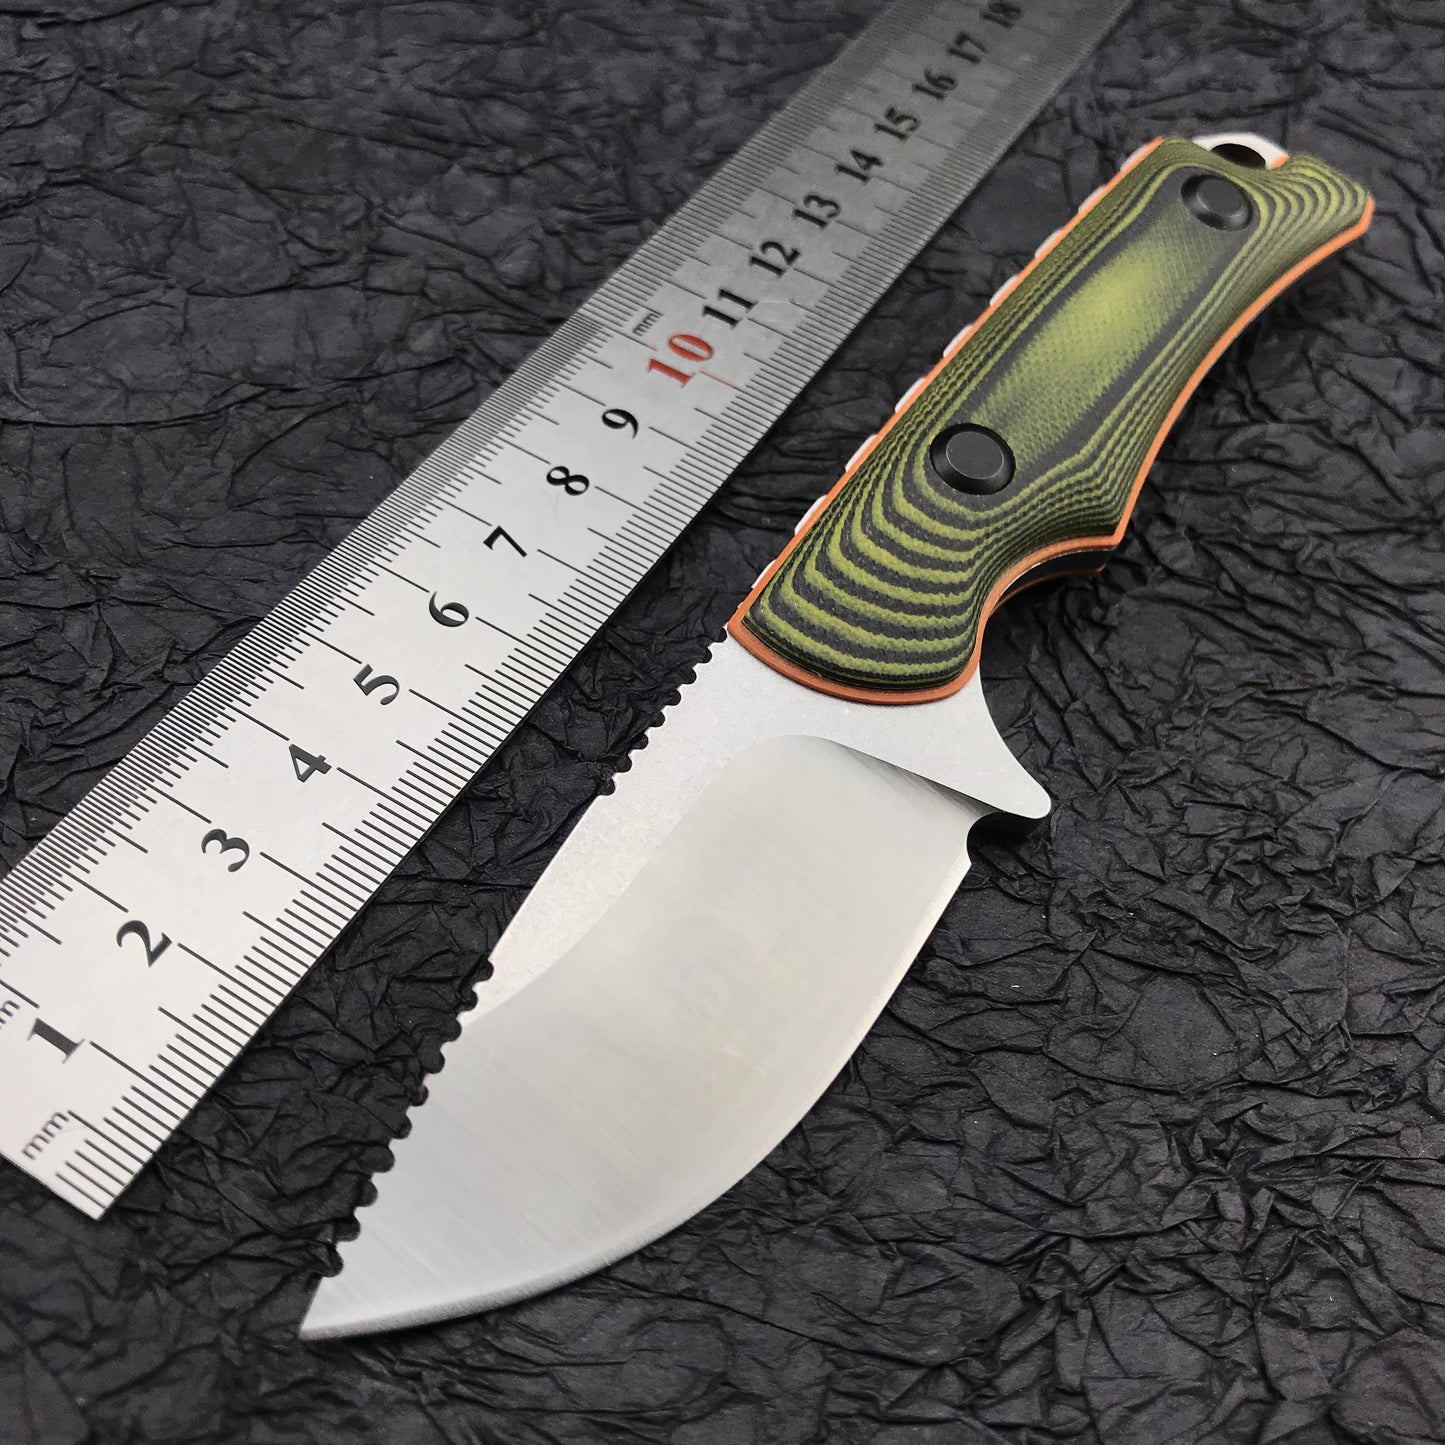 New Benchmade 15017-1 Hunt Hidden Canyon Hunter Fixed Blade Knife , Richlite/ Green G10 Handles,2.79" 8Cr13Mov Drop Point knives Kydex Sheath